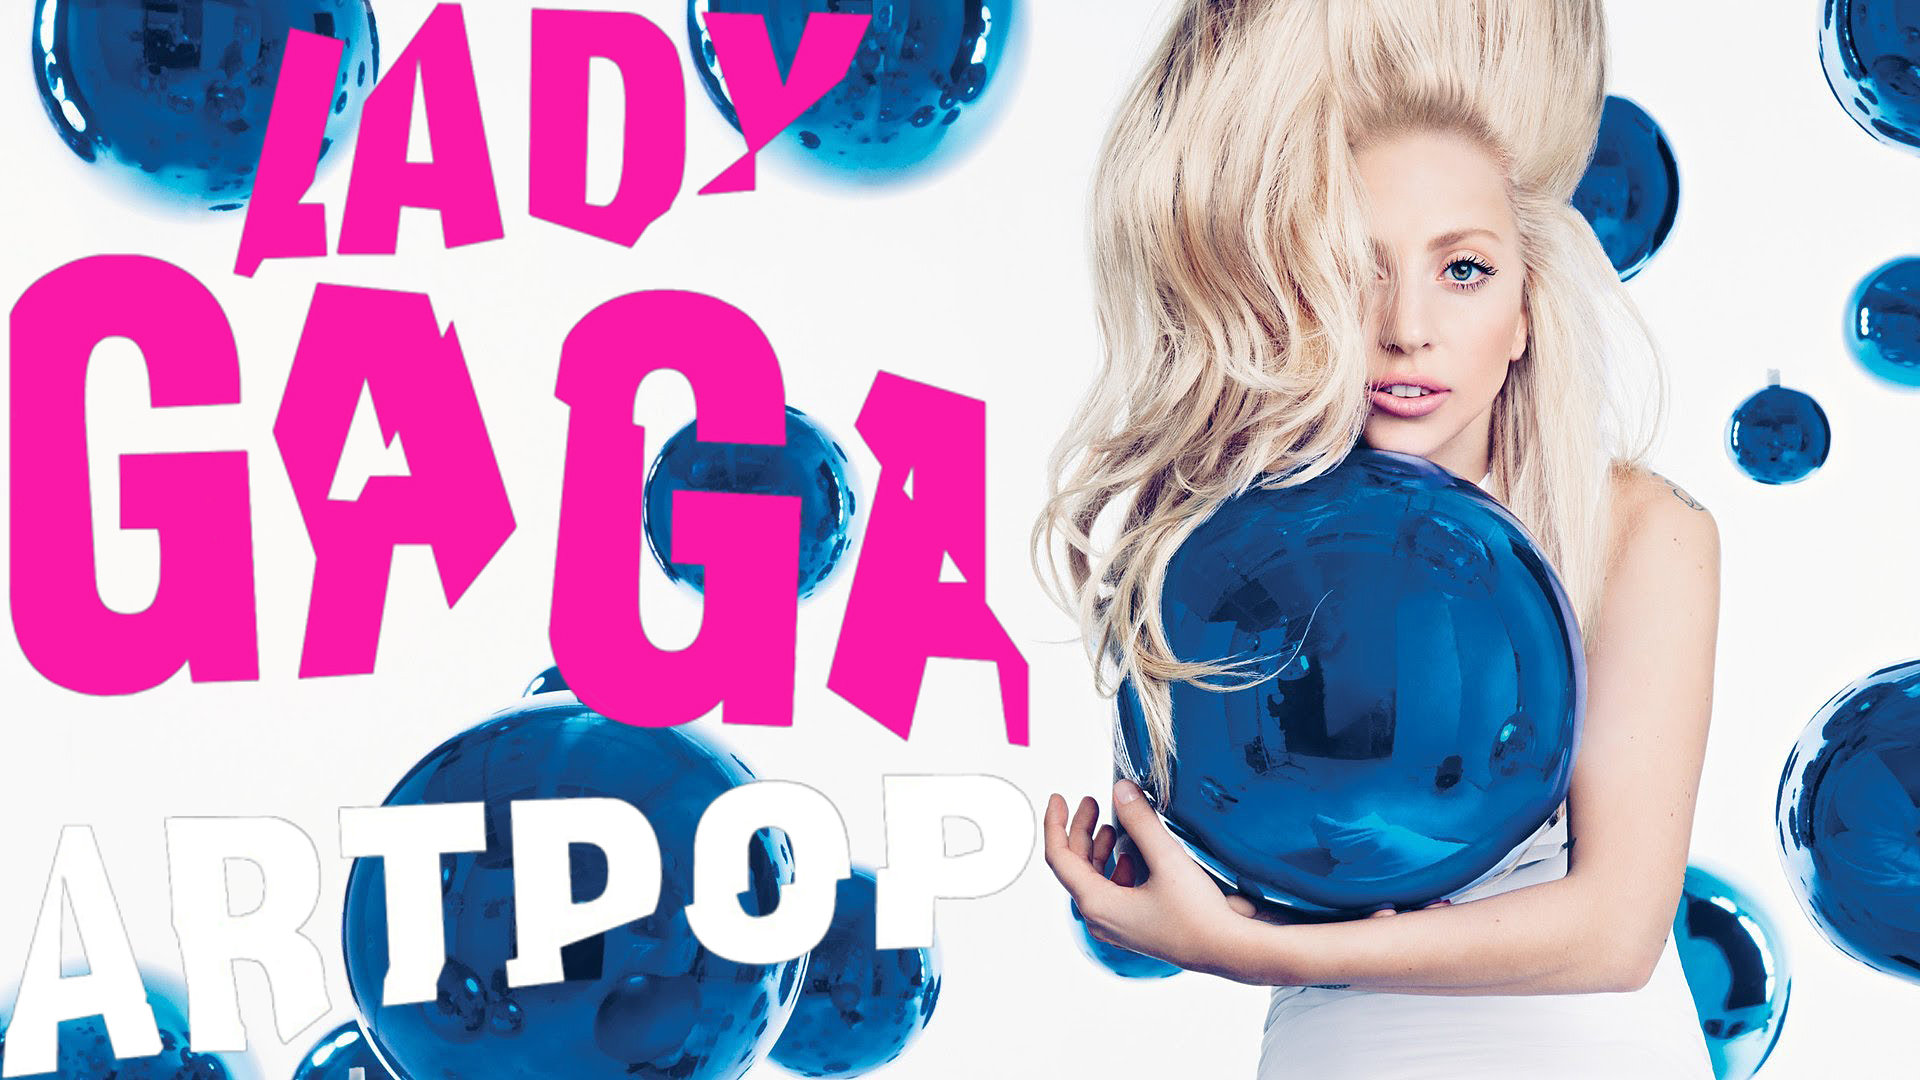 Faixa Descartada De Artpop Da Lady Gaga Vaza Na Web Studio Fm